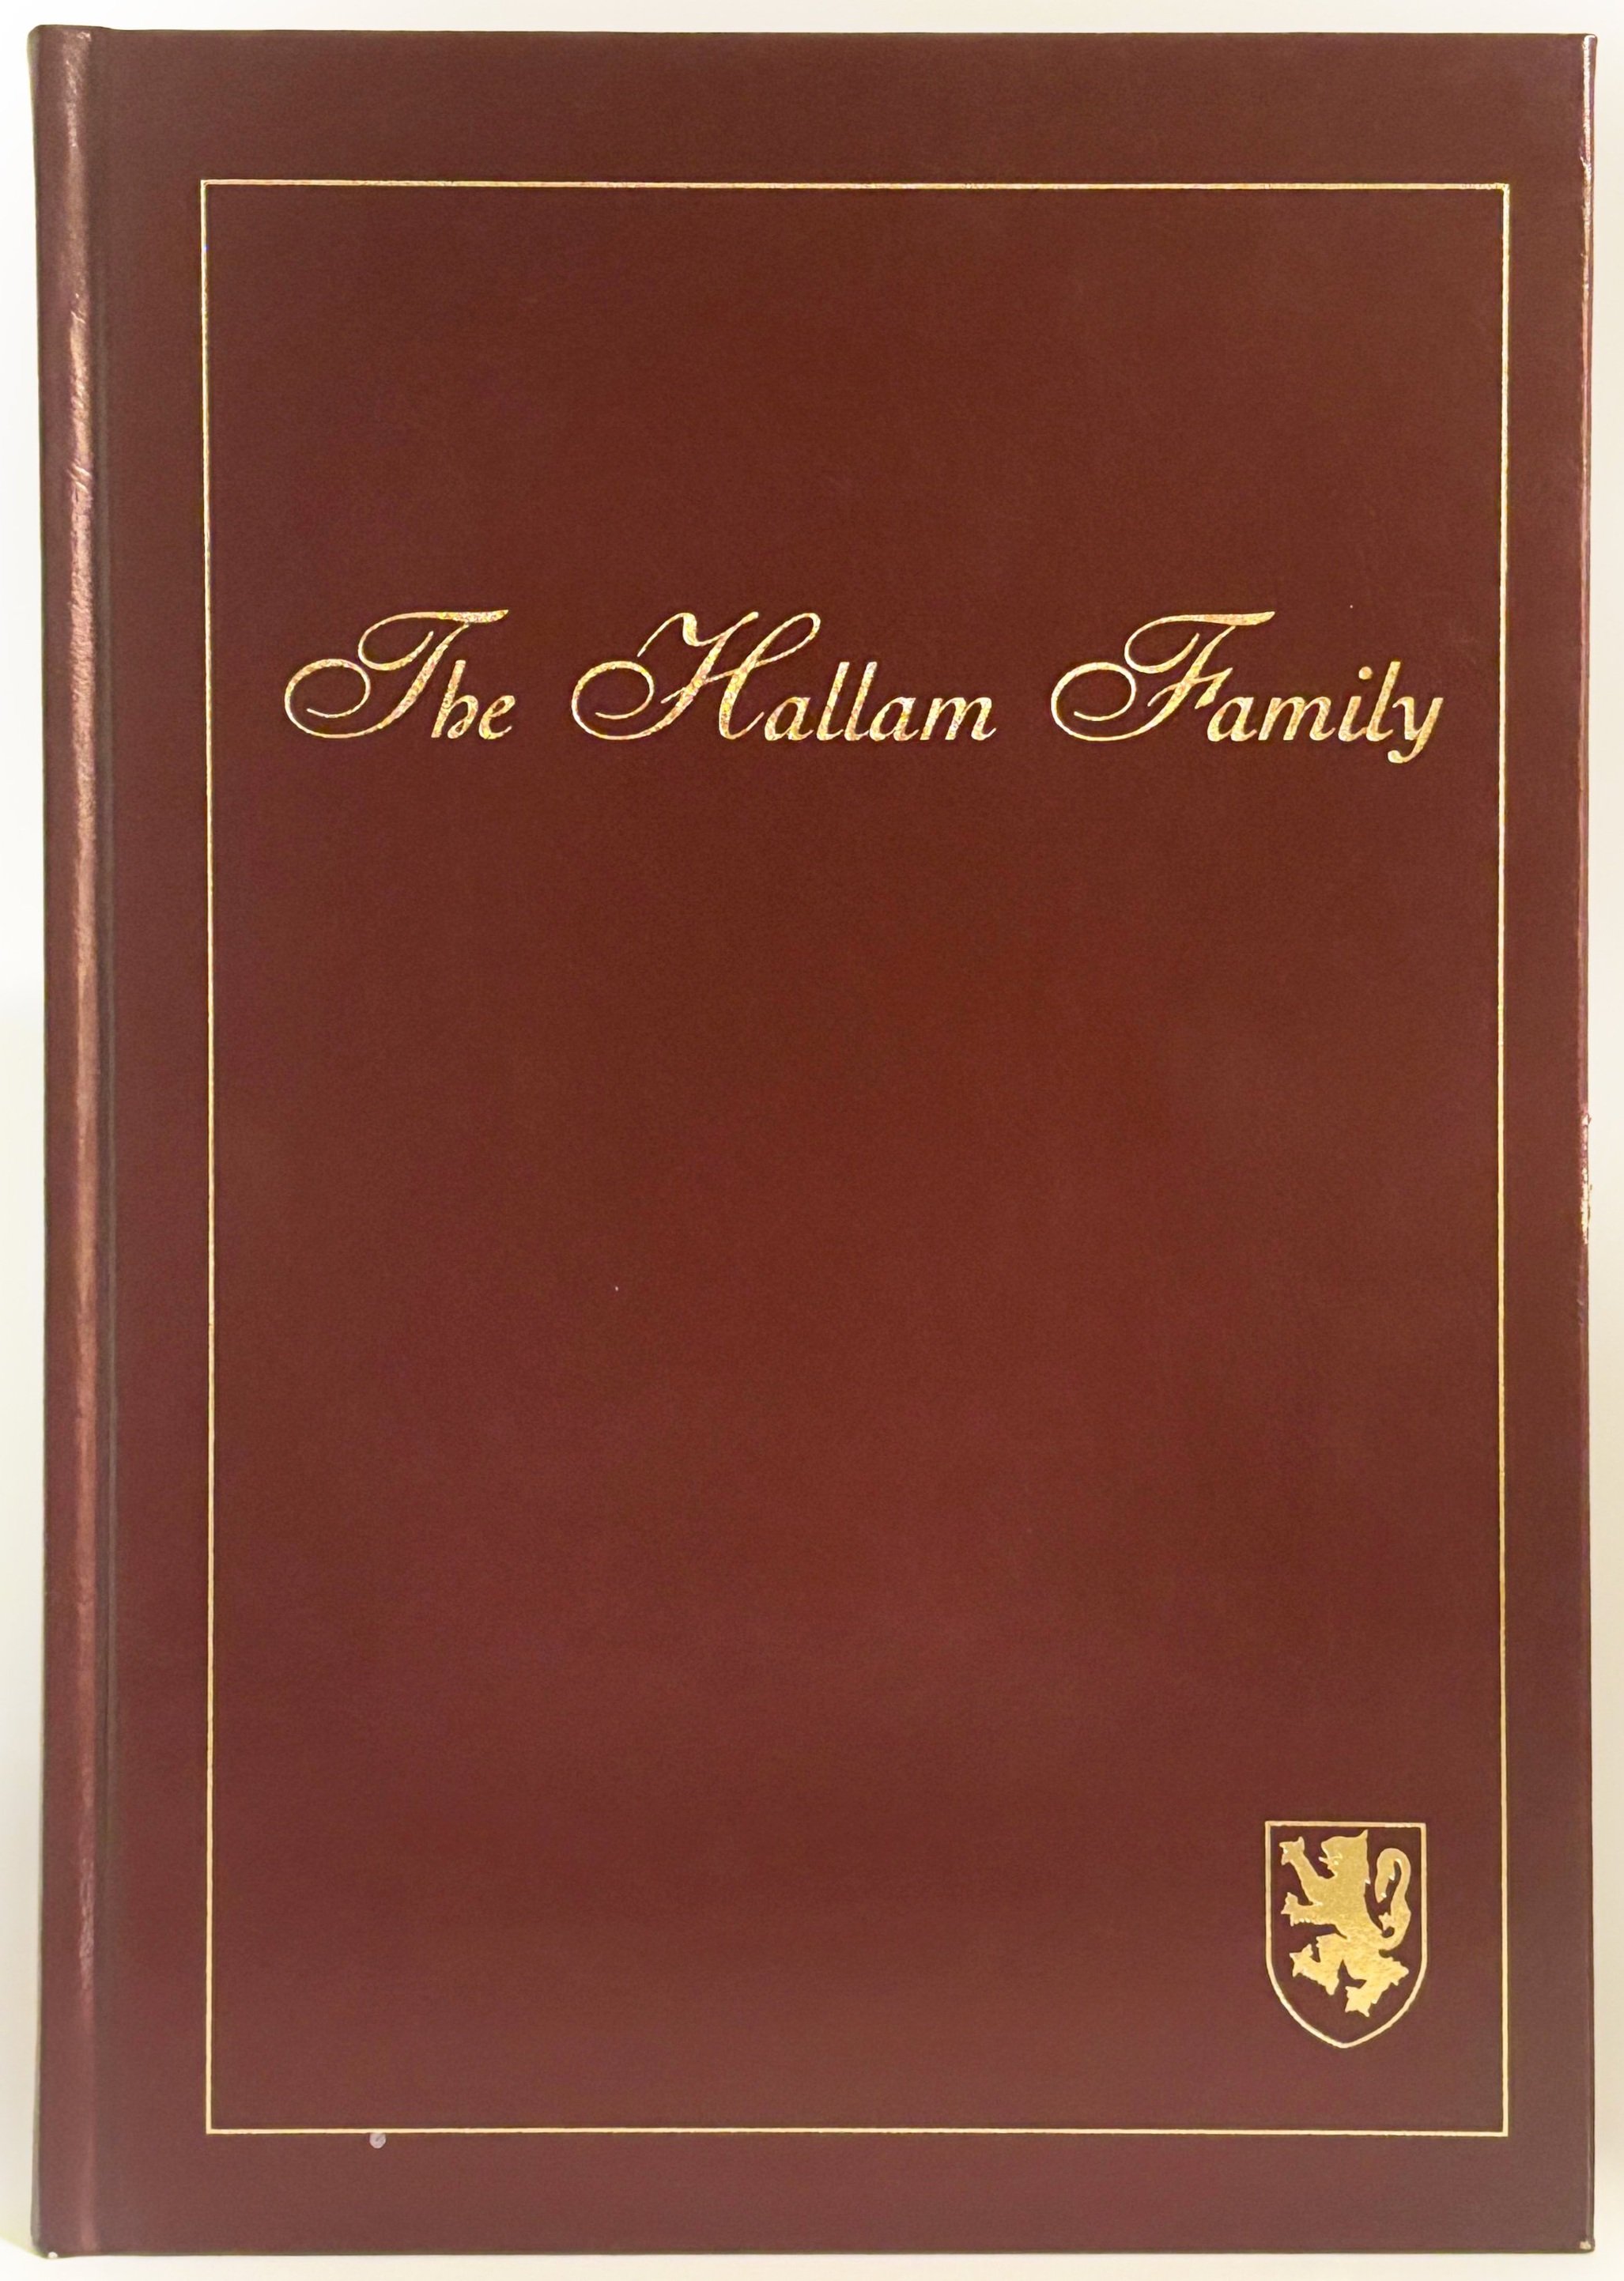 The Hallam Family (2008)